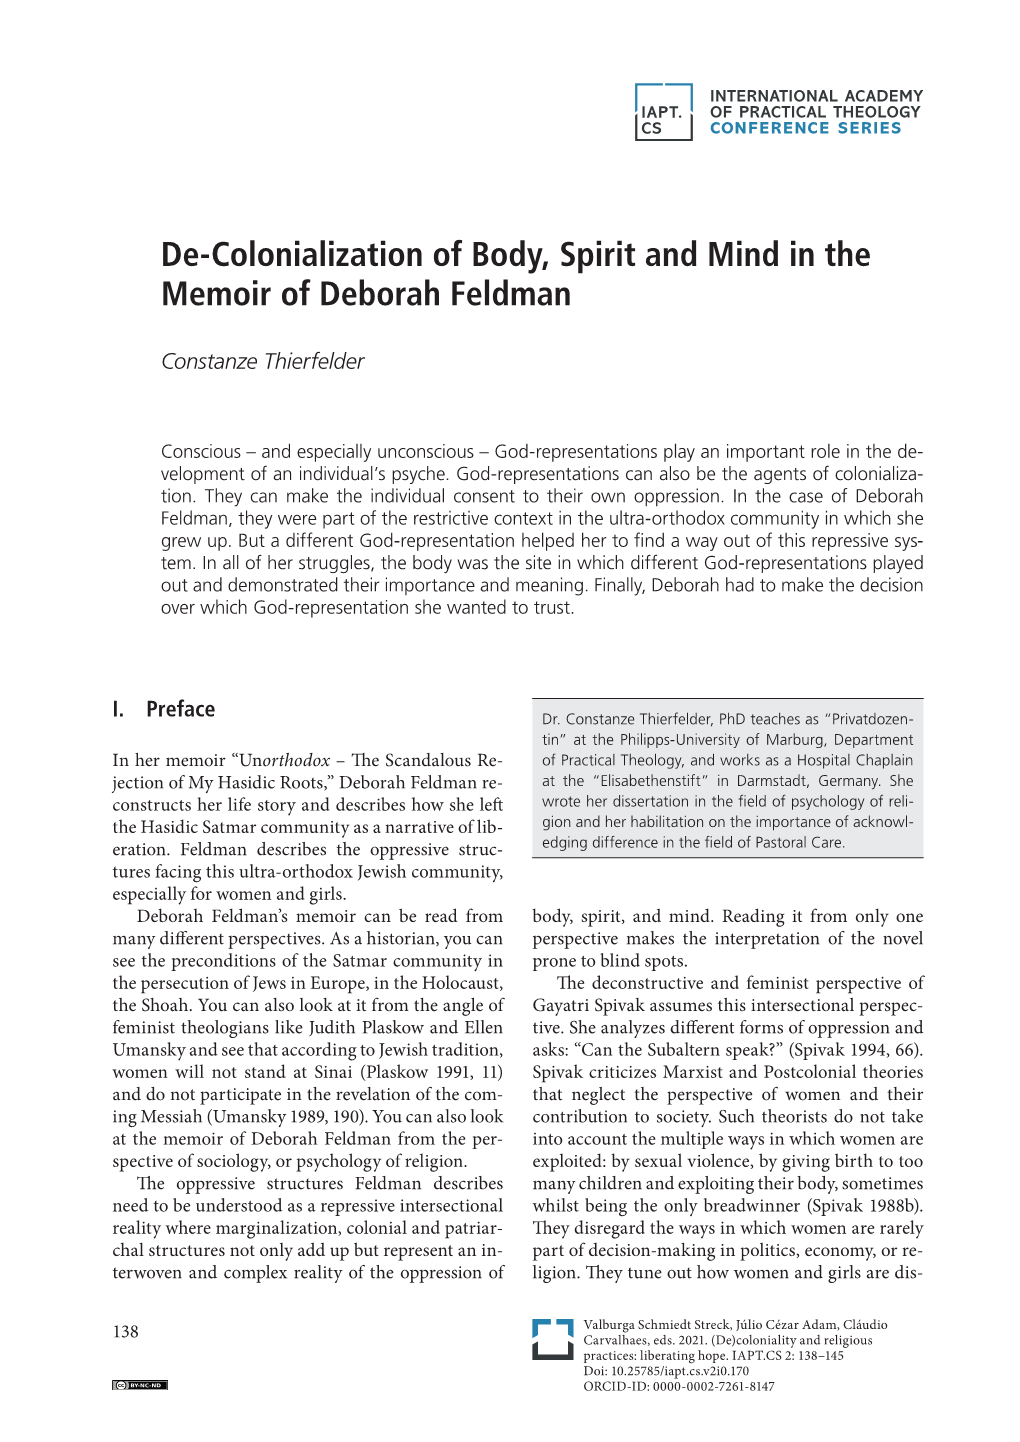 De-Colonialization of Body, Spirit and Mind in the Memoir of Deborah Feldman